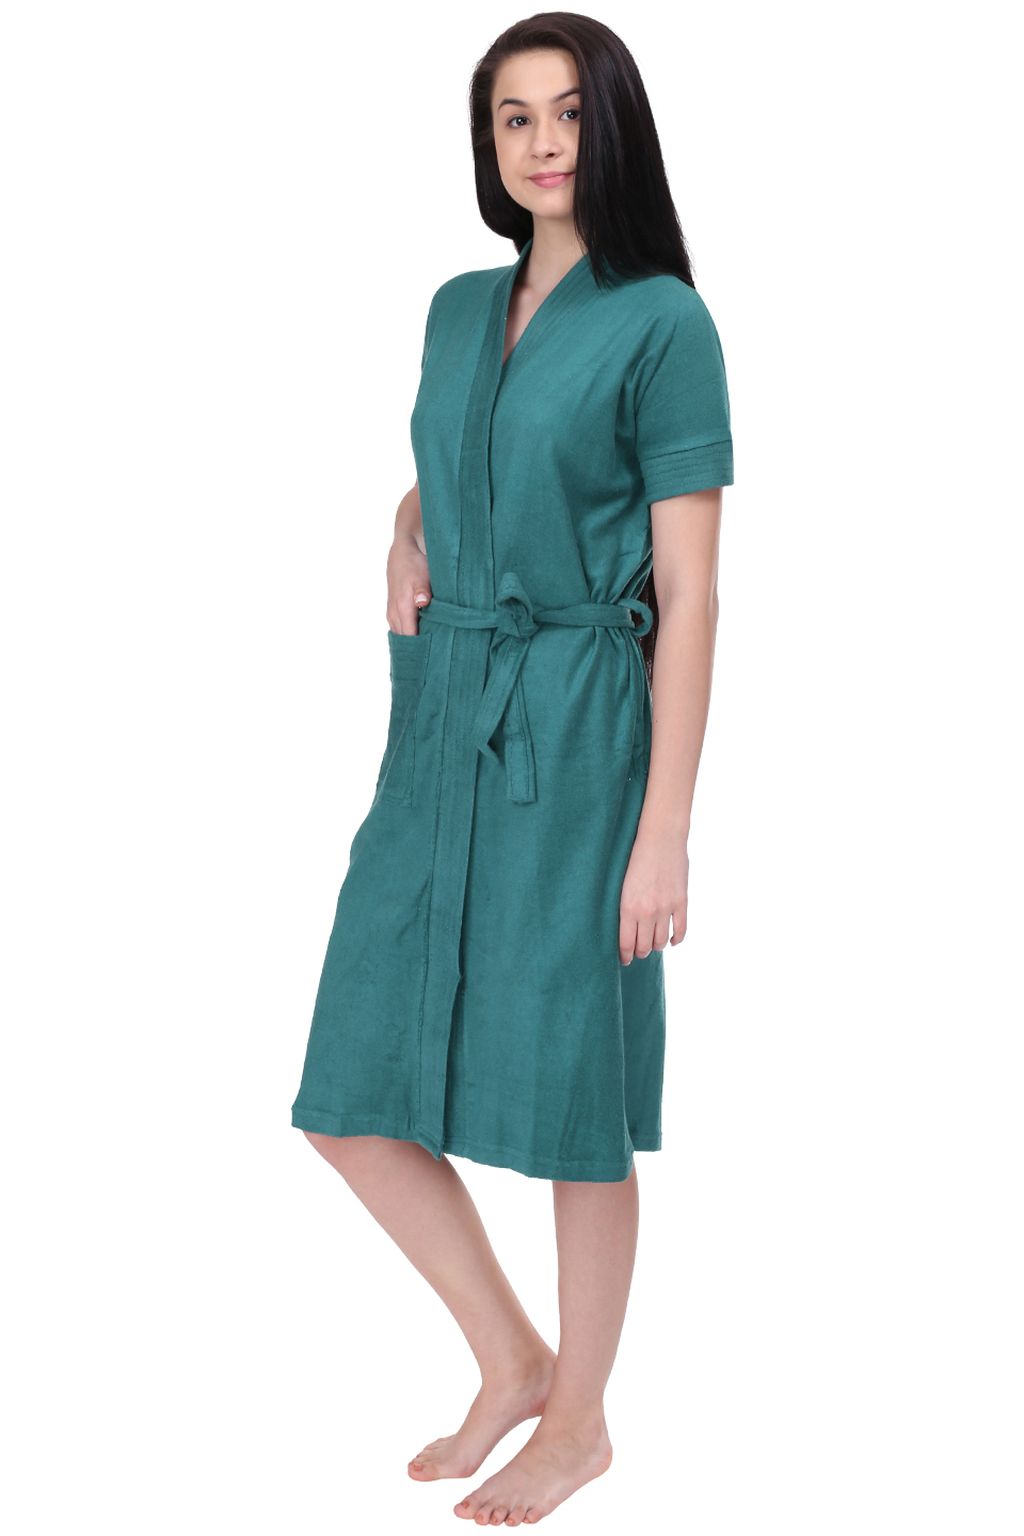 Solid Color Cotton Slub Gown in Dark Green : TYG103